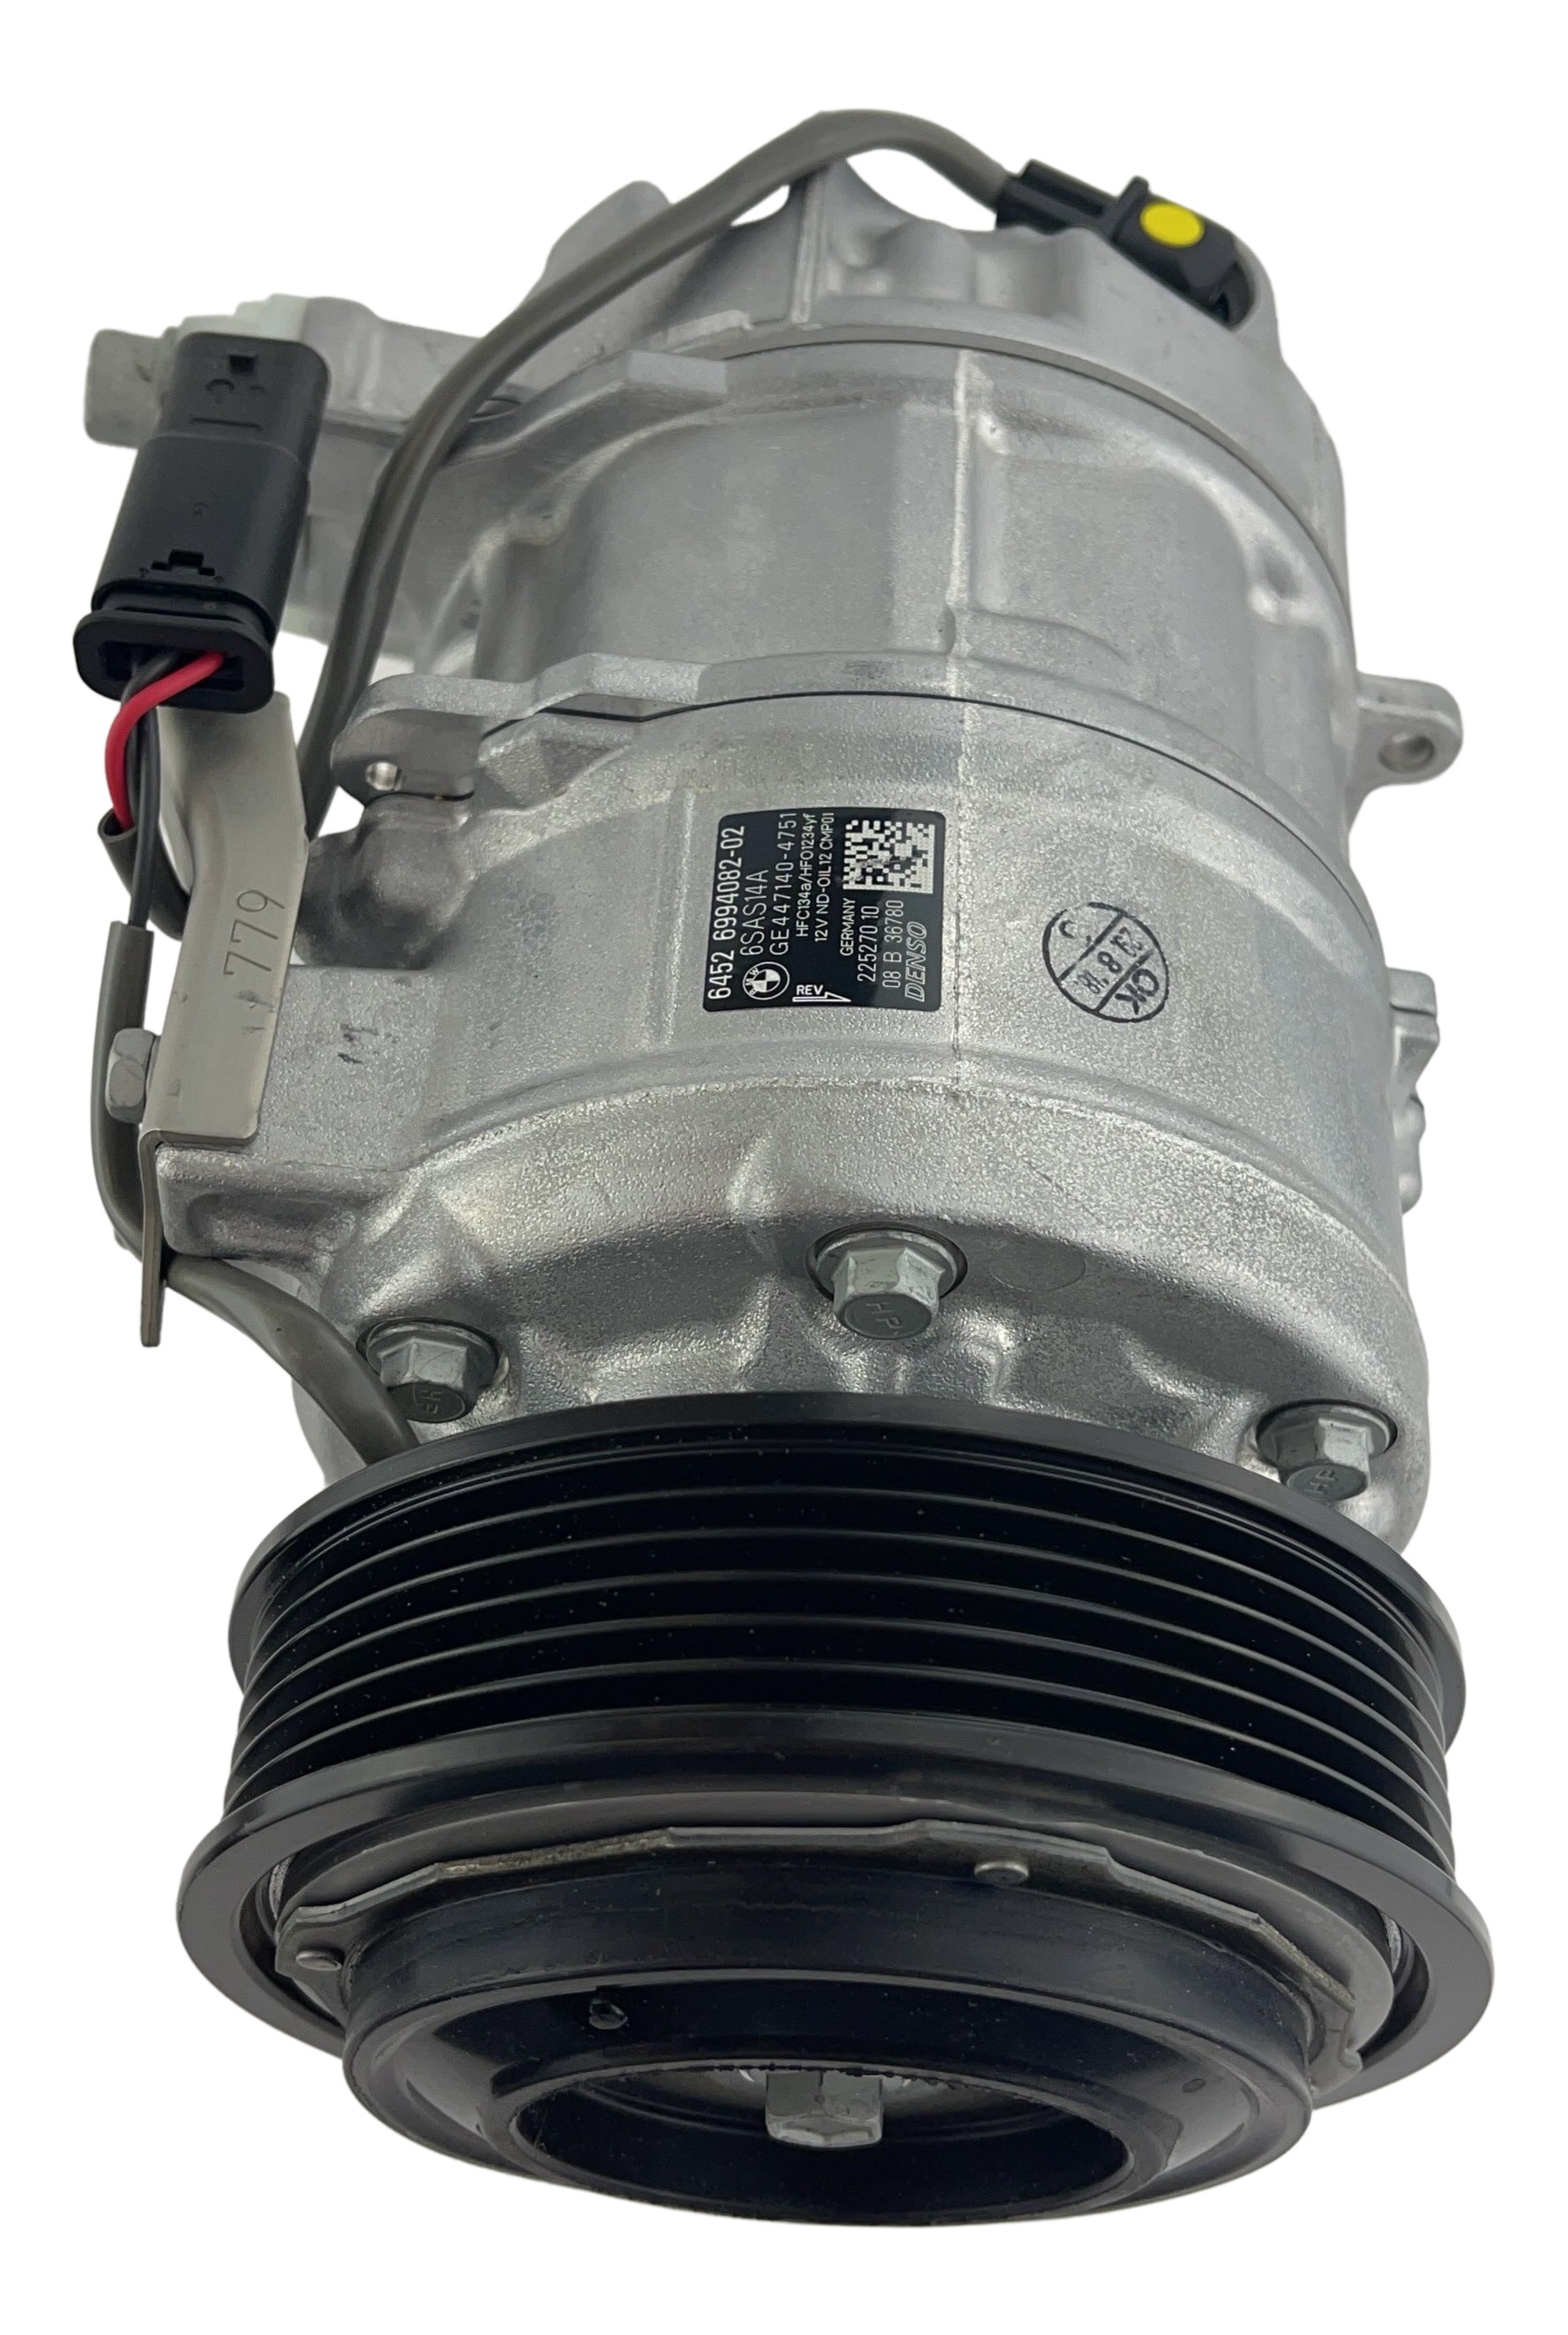 31640.6T1VAL New Valeo A/C Compressor Product Image field_60b6a13a6e67c